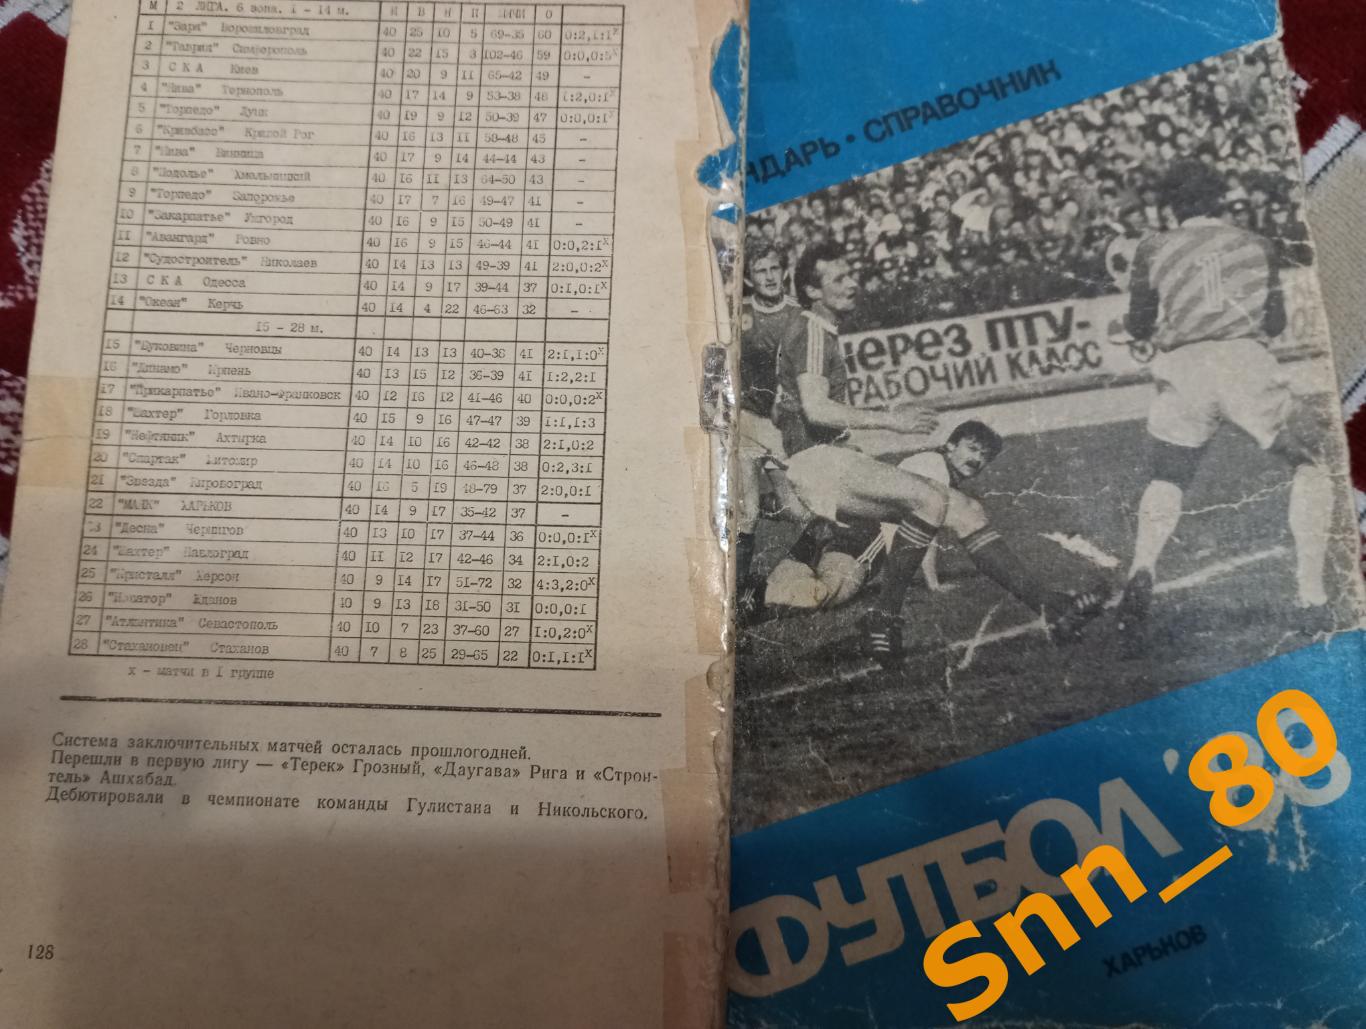 Футбол Календарь-справочник Футбольный календарь Харьков 1988 1